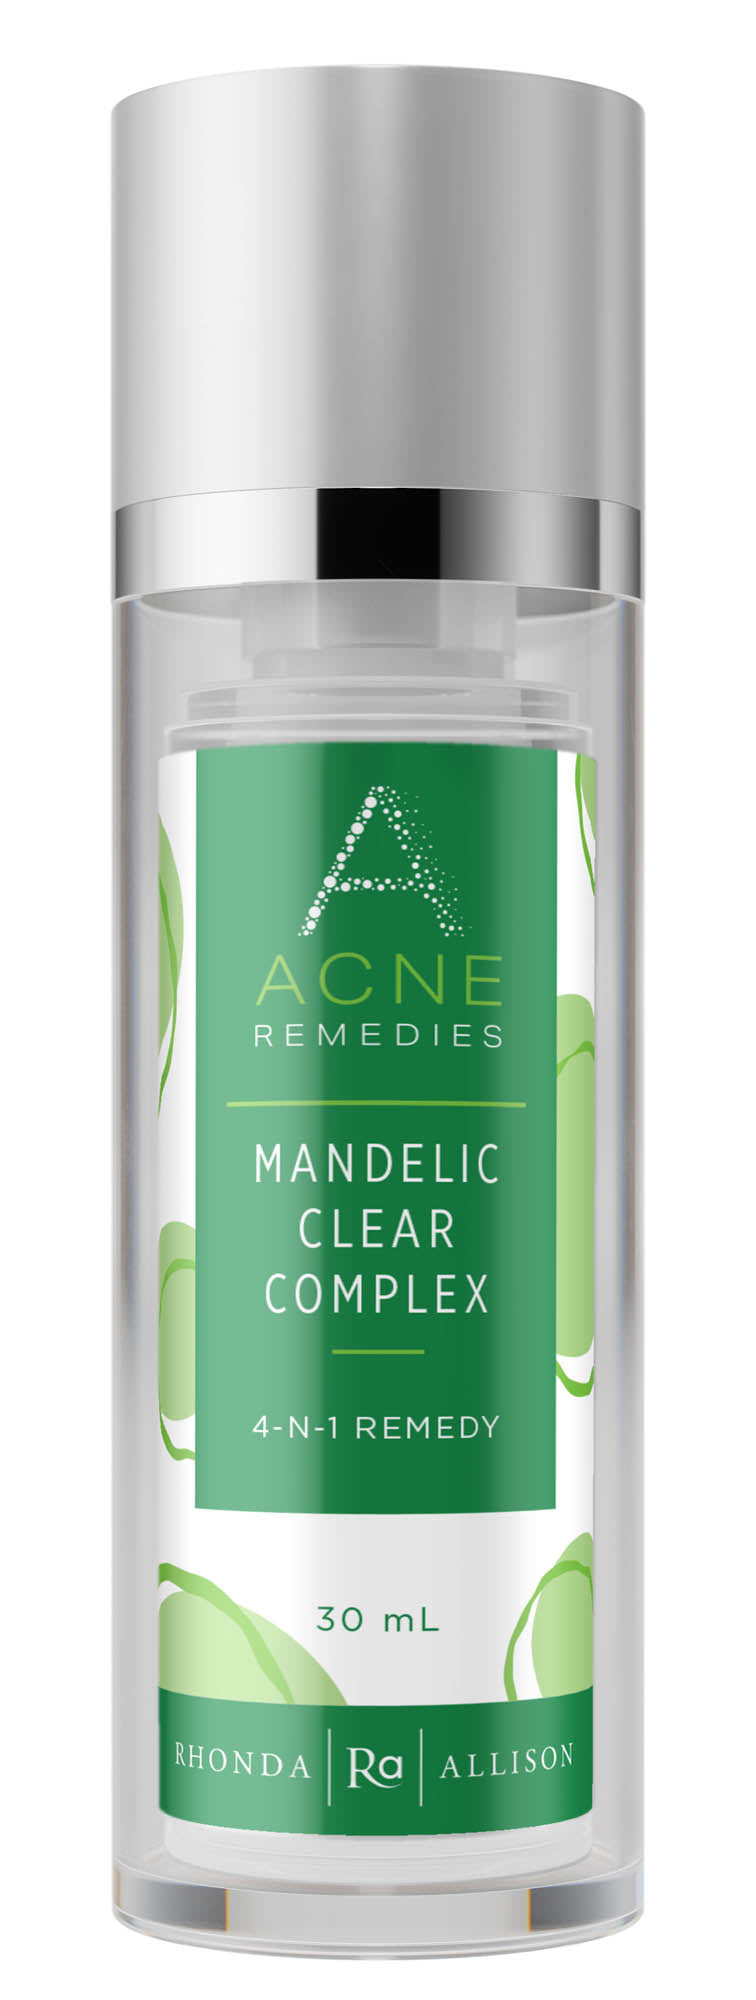 Rhonda Allison Mandelic Mandelic Clear Complex